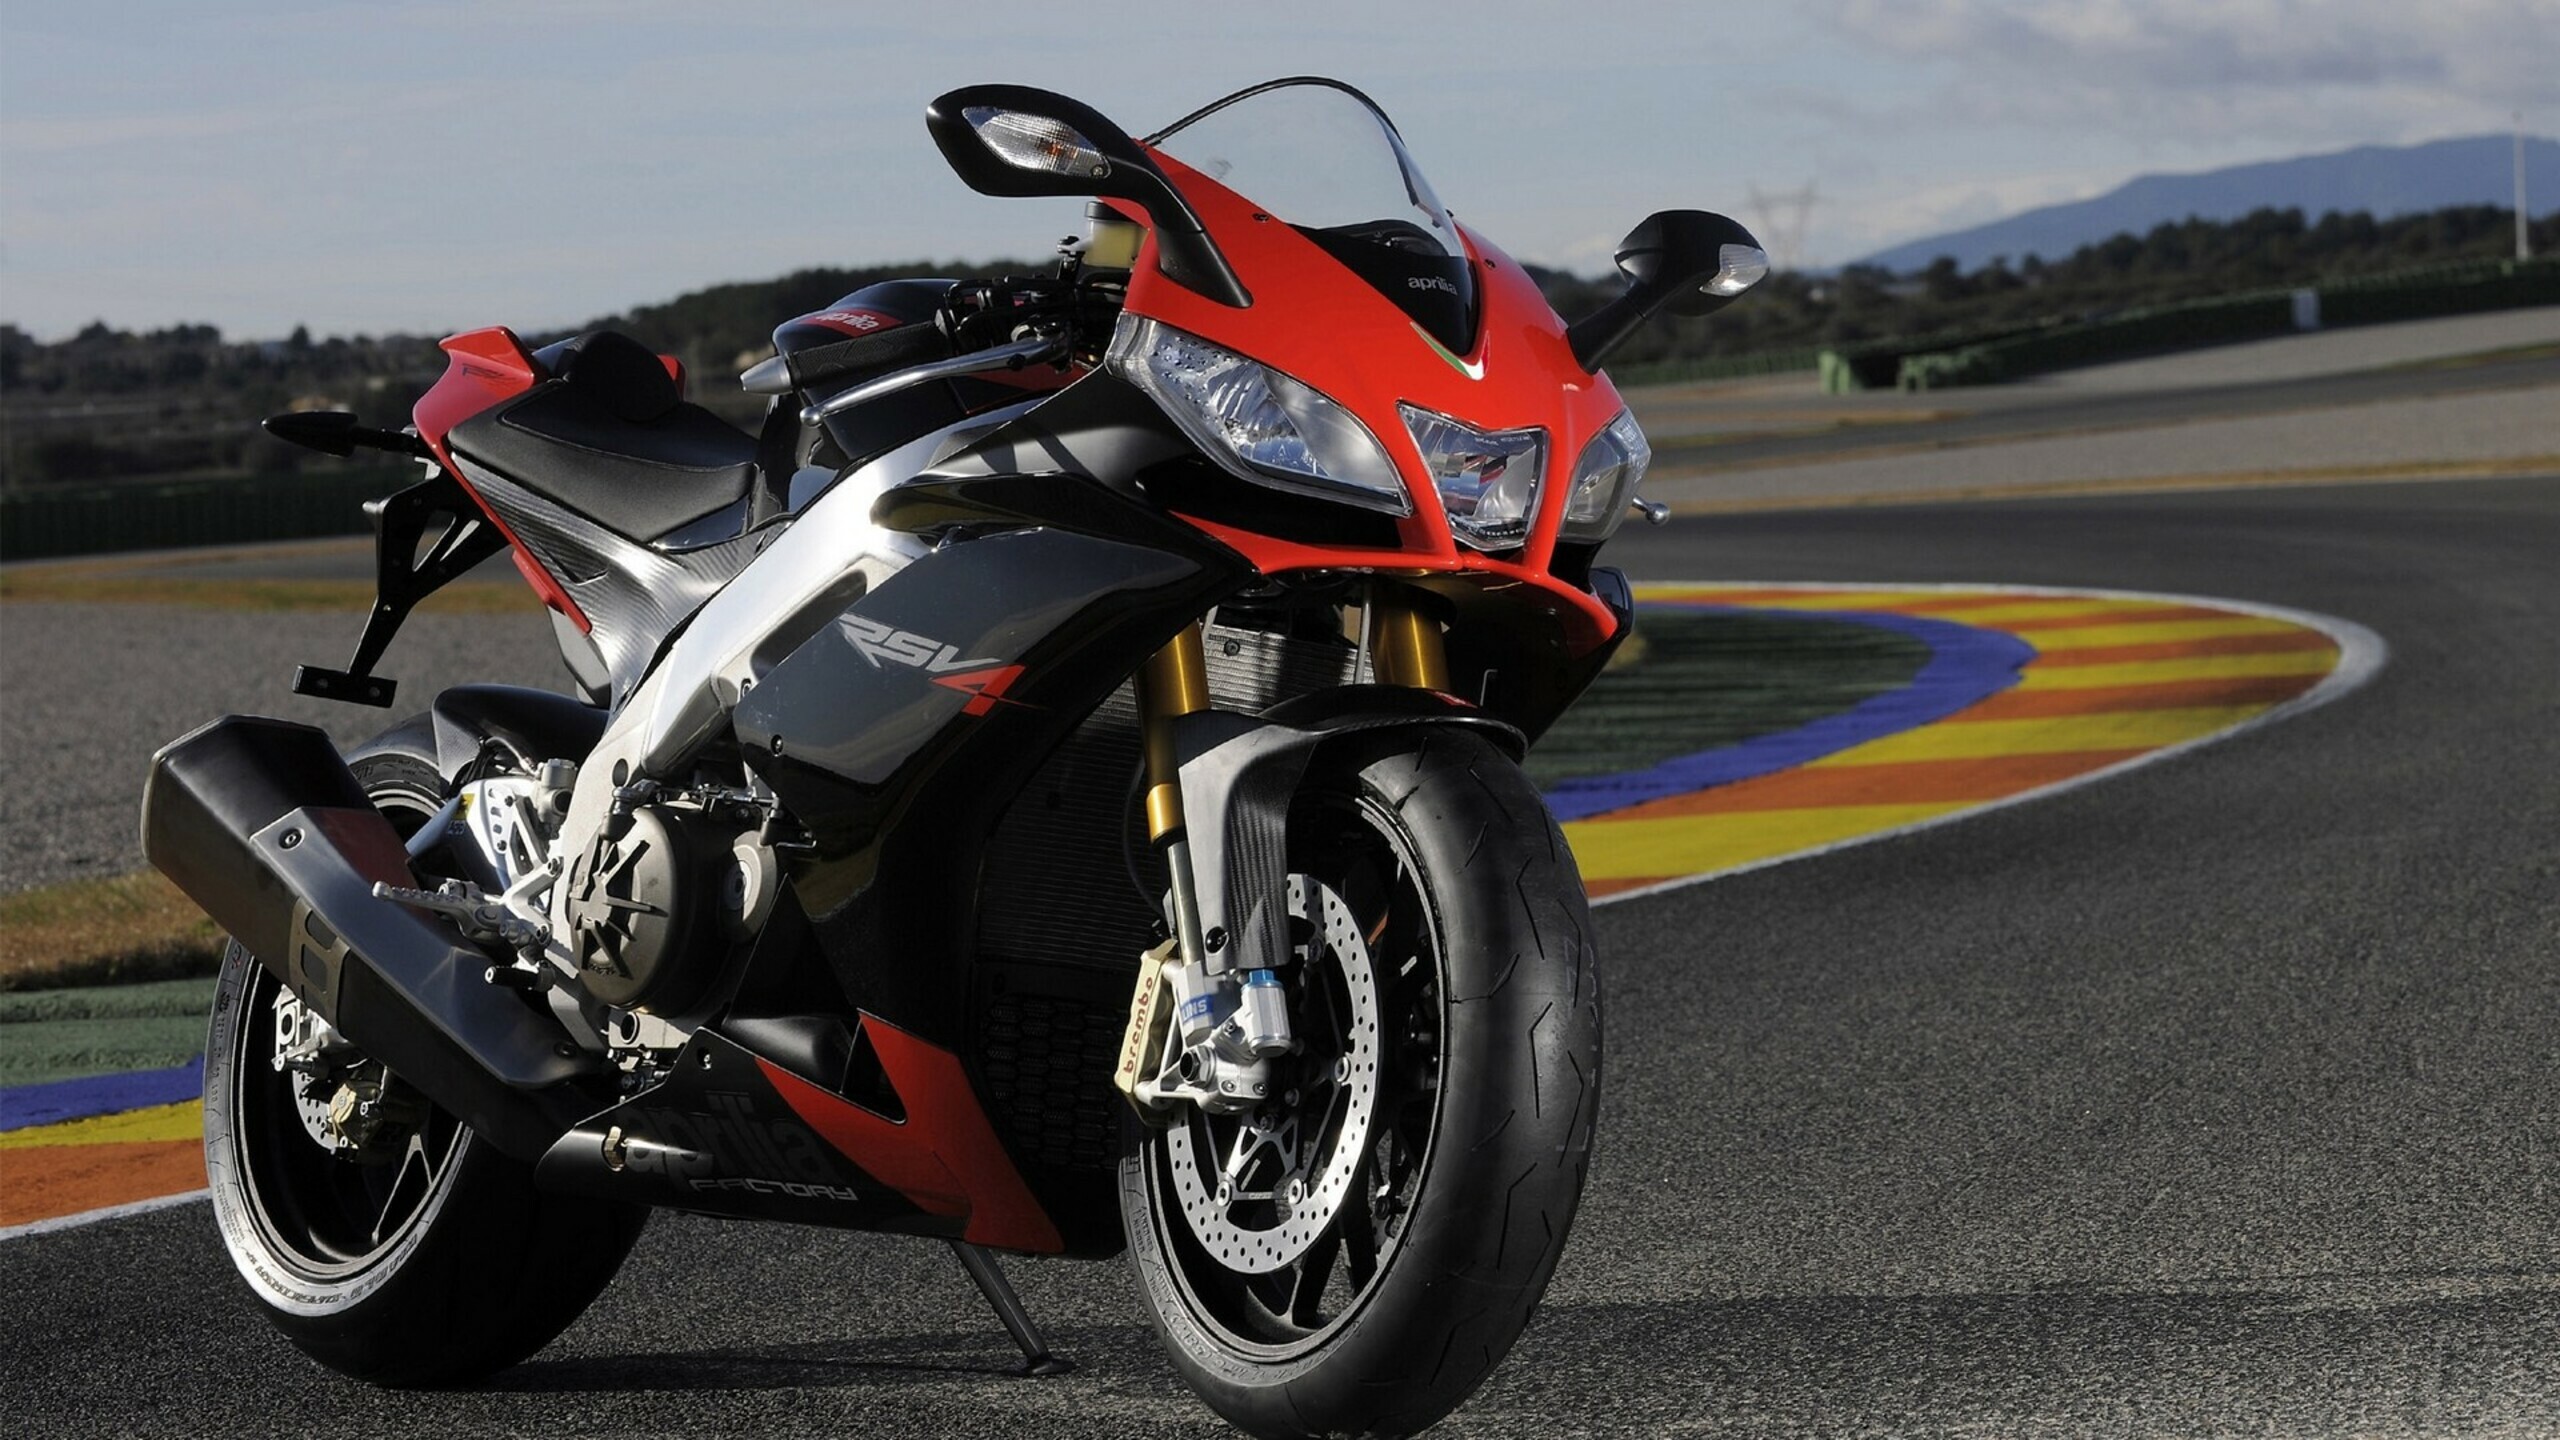 Aprilia: RSV4, Italian motorcycle, Production began in 2008. 2560x1440 HD Wallpaper.